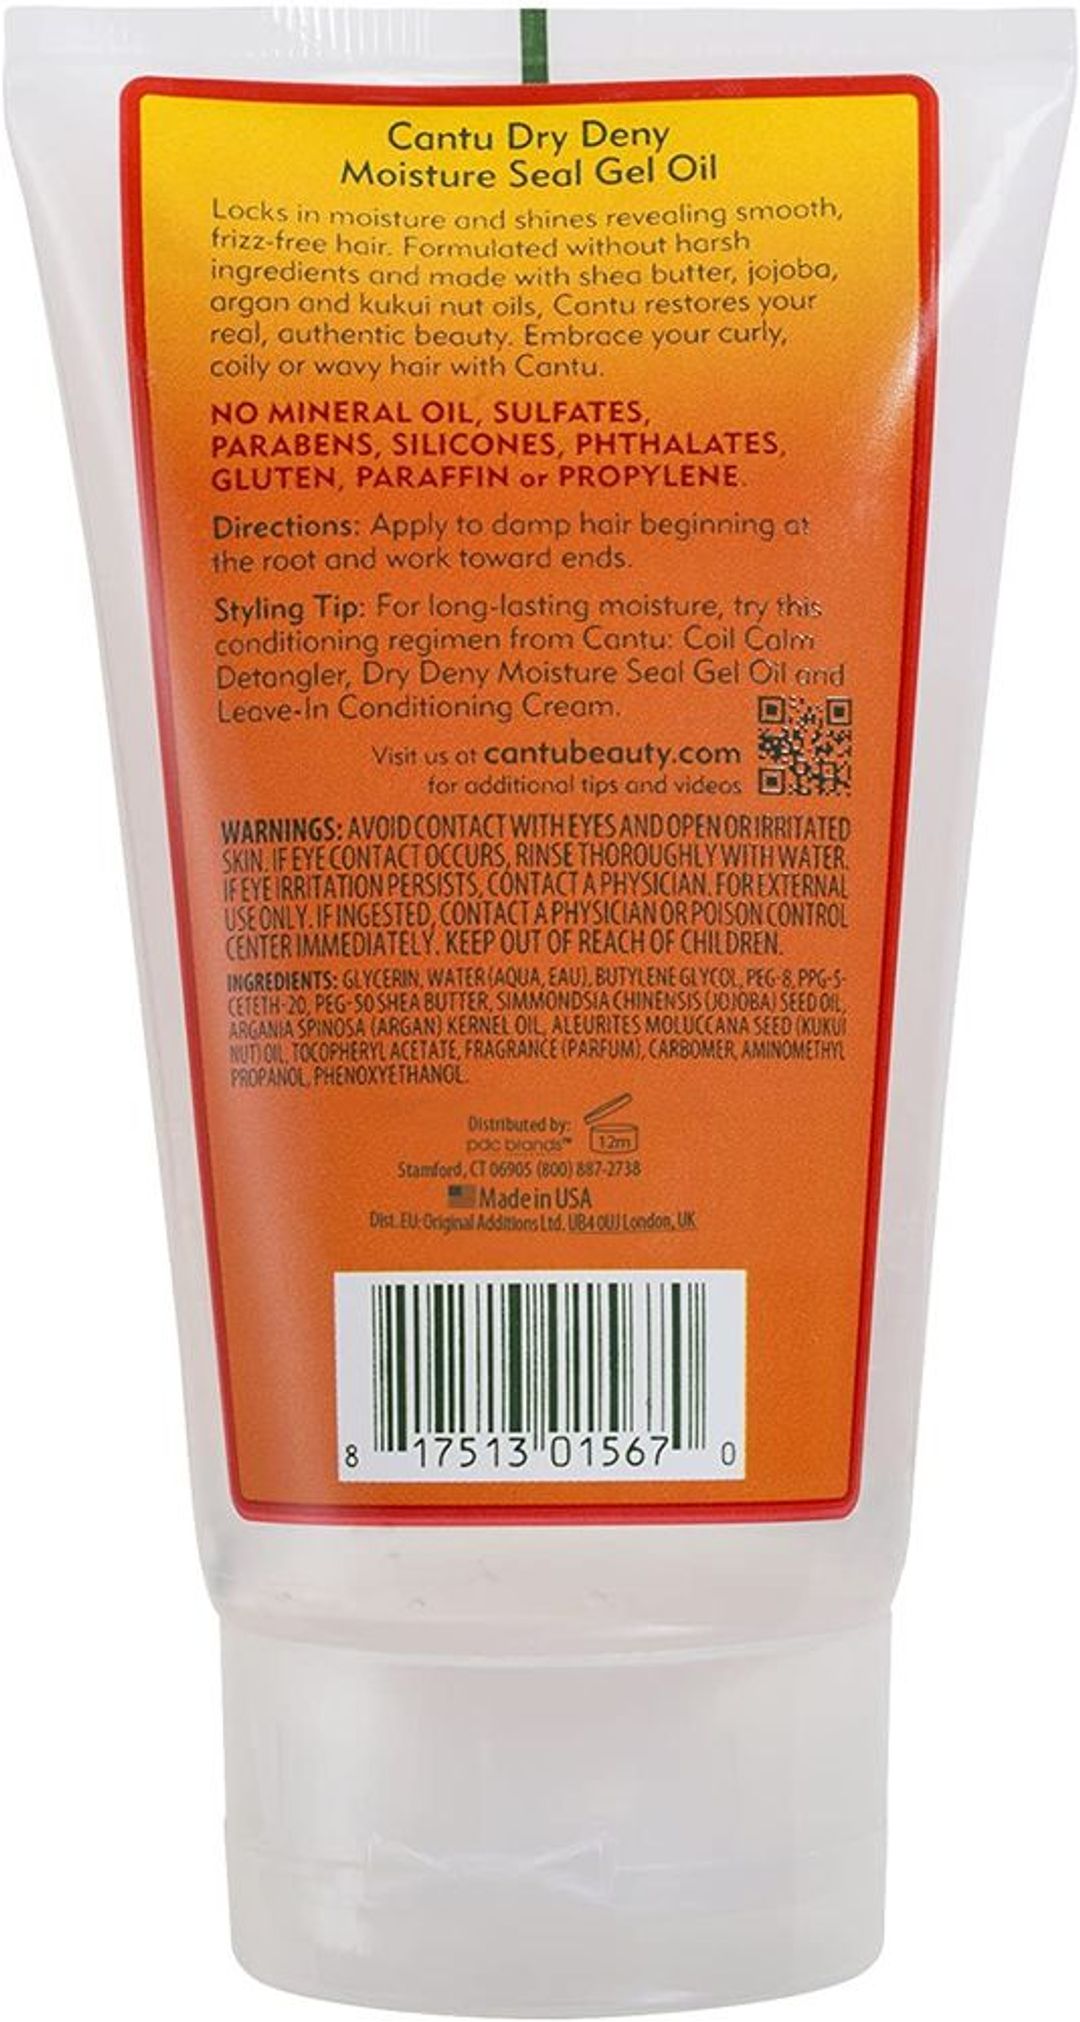 Cantu Shea Butter Dry Deny Moisture Seal Gel Oil For Natural Hair - 142g